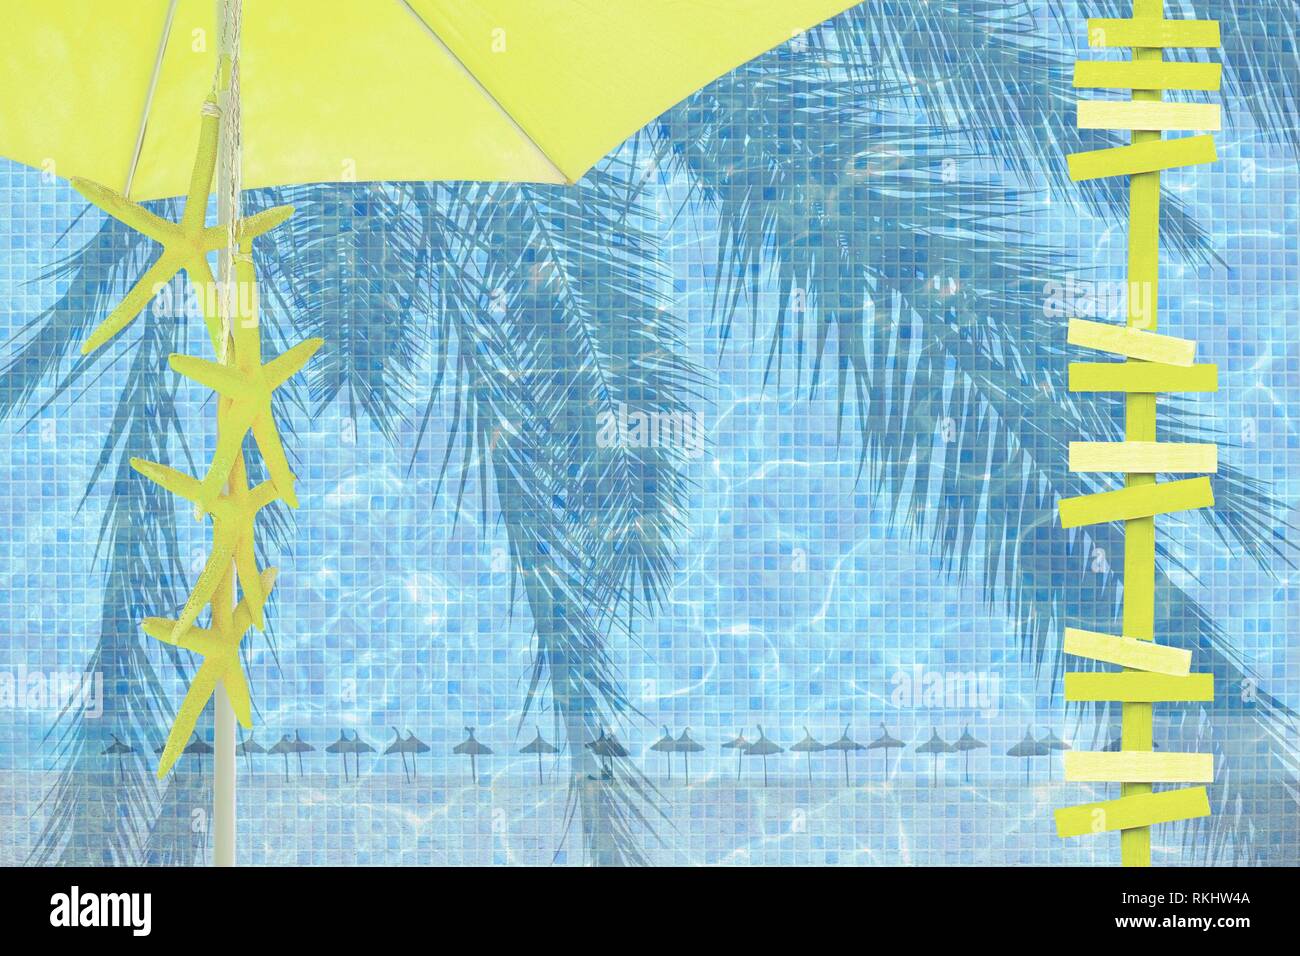 Yellow parasol arrows yellow starfish mood ad space summer resort theme background. Stock Photo